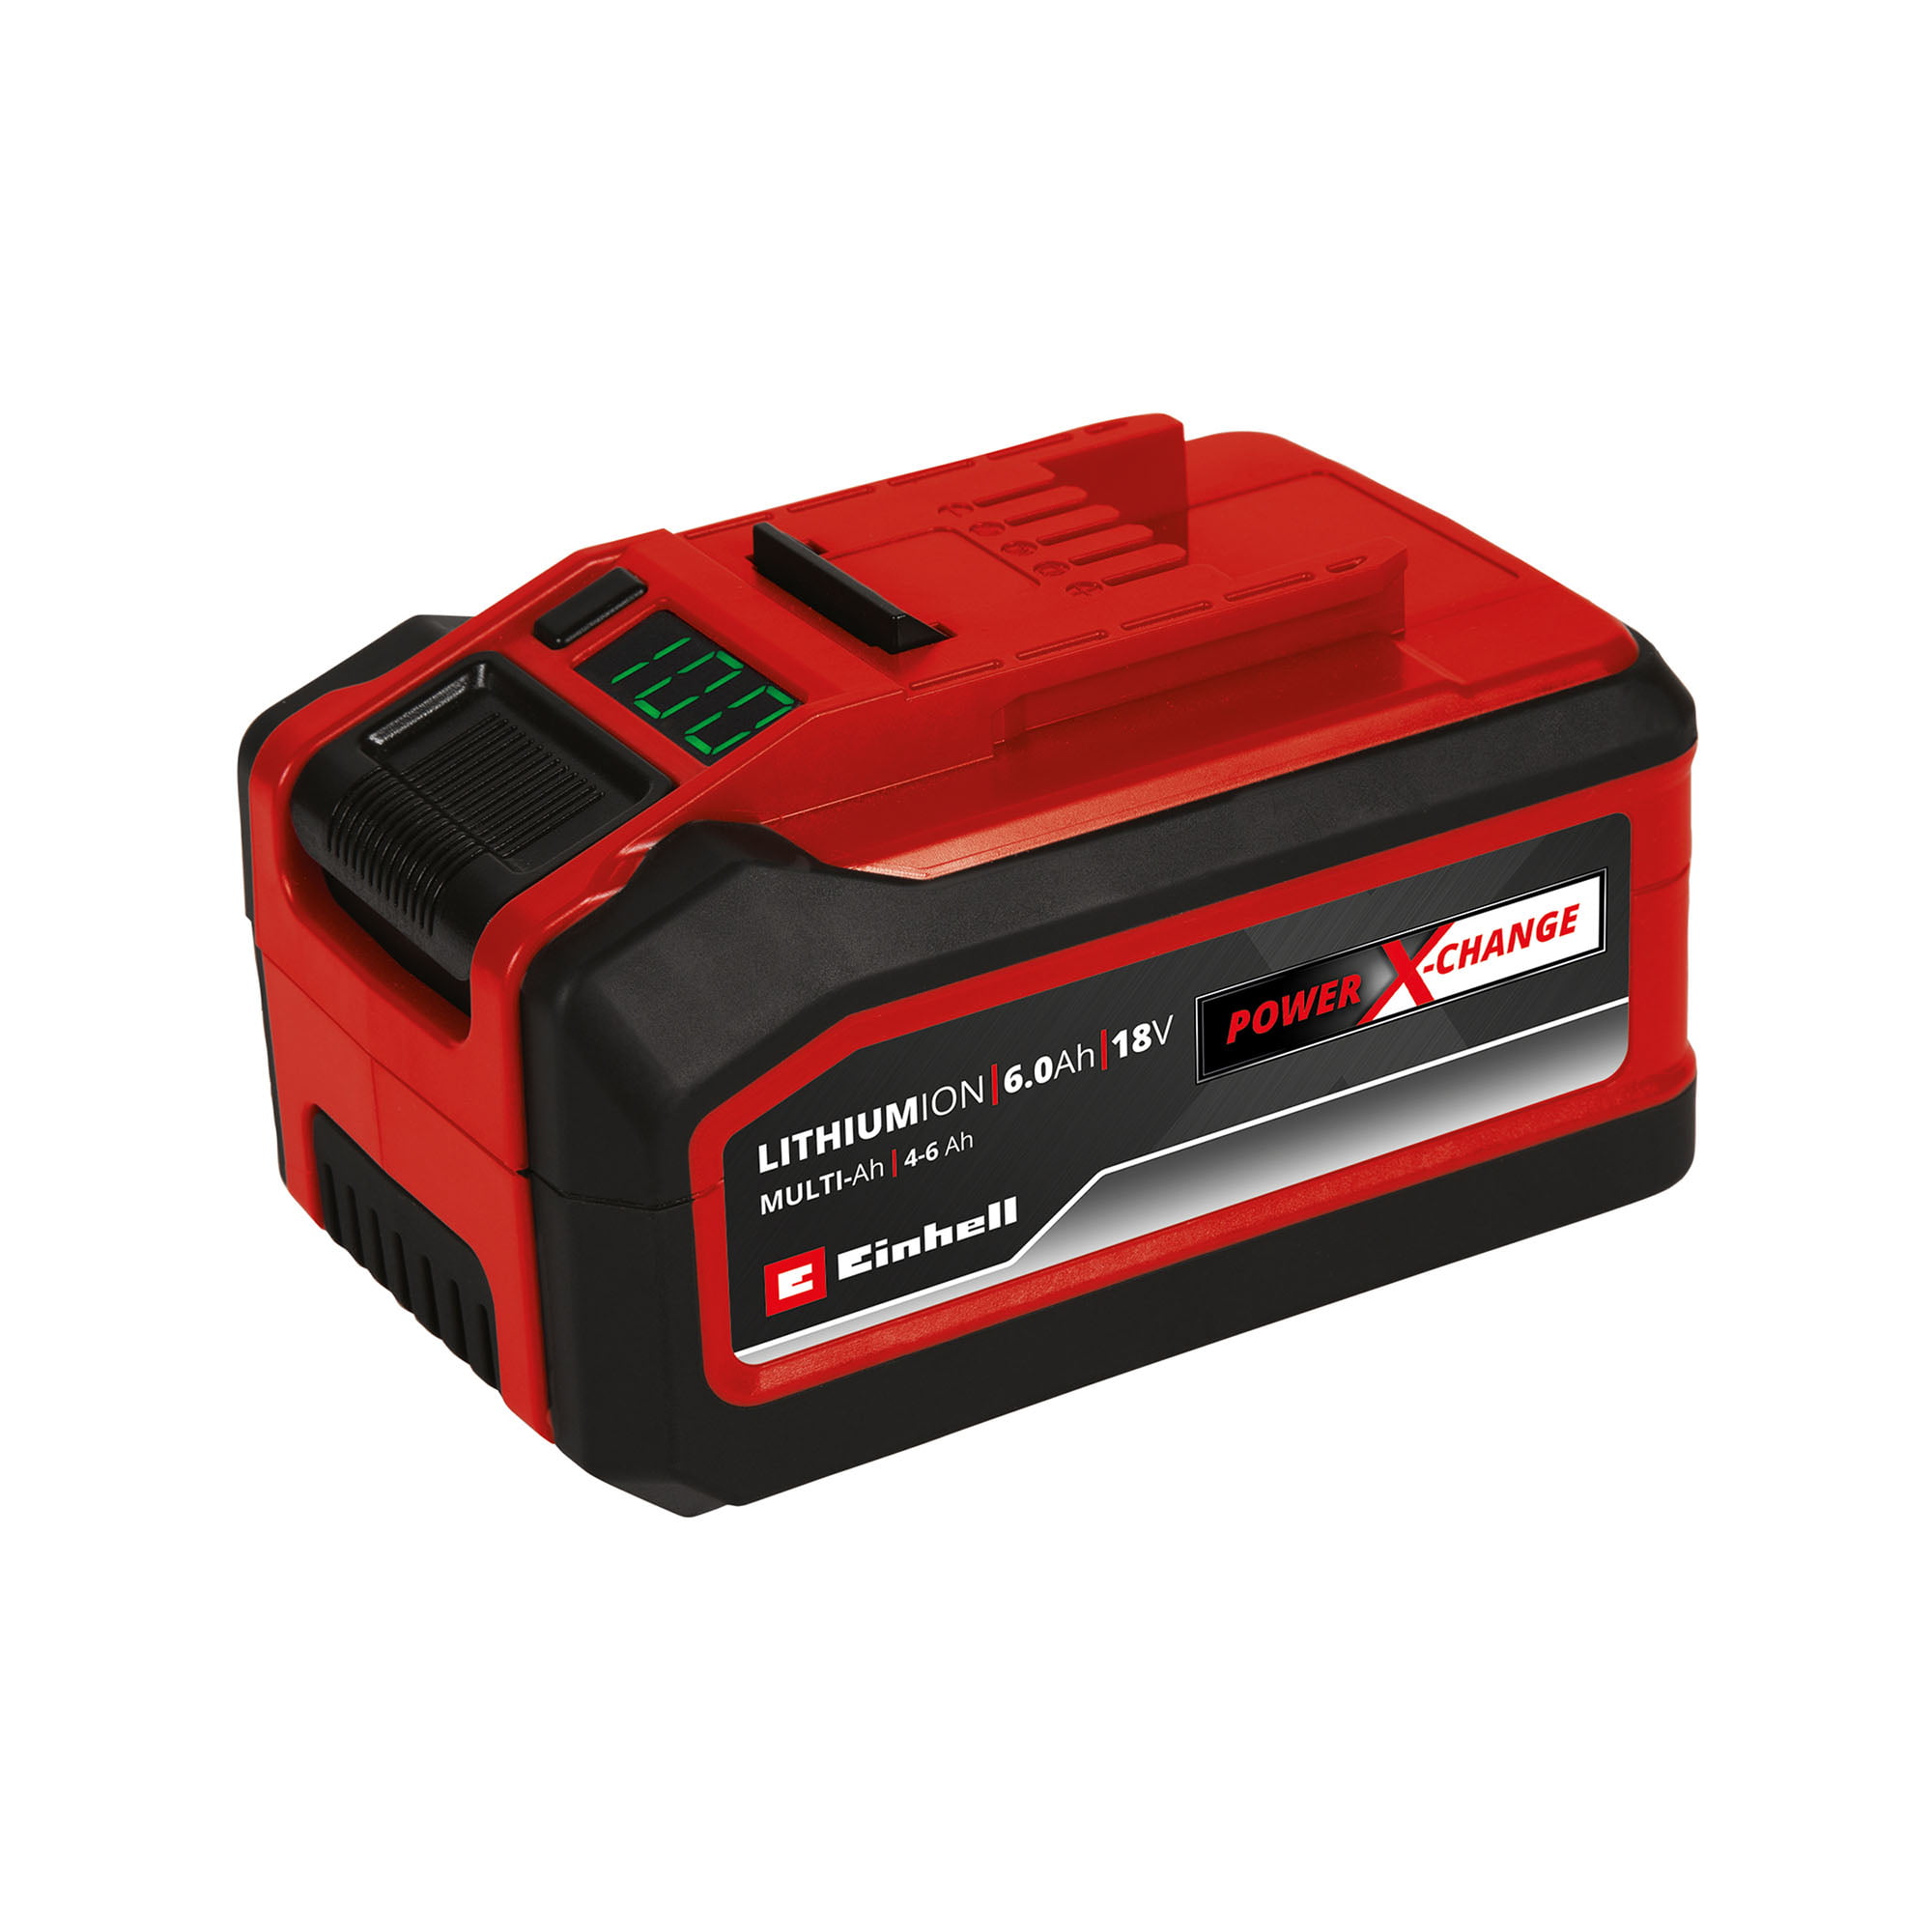 Einhell baterija Power X-Change PLUS 18 V 4-6 Ah Multi-Ah - masineialati.ba  - Profesionalni i hobi alati i mašine